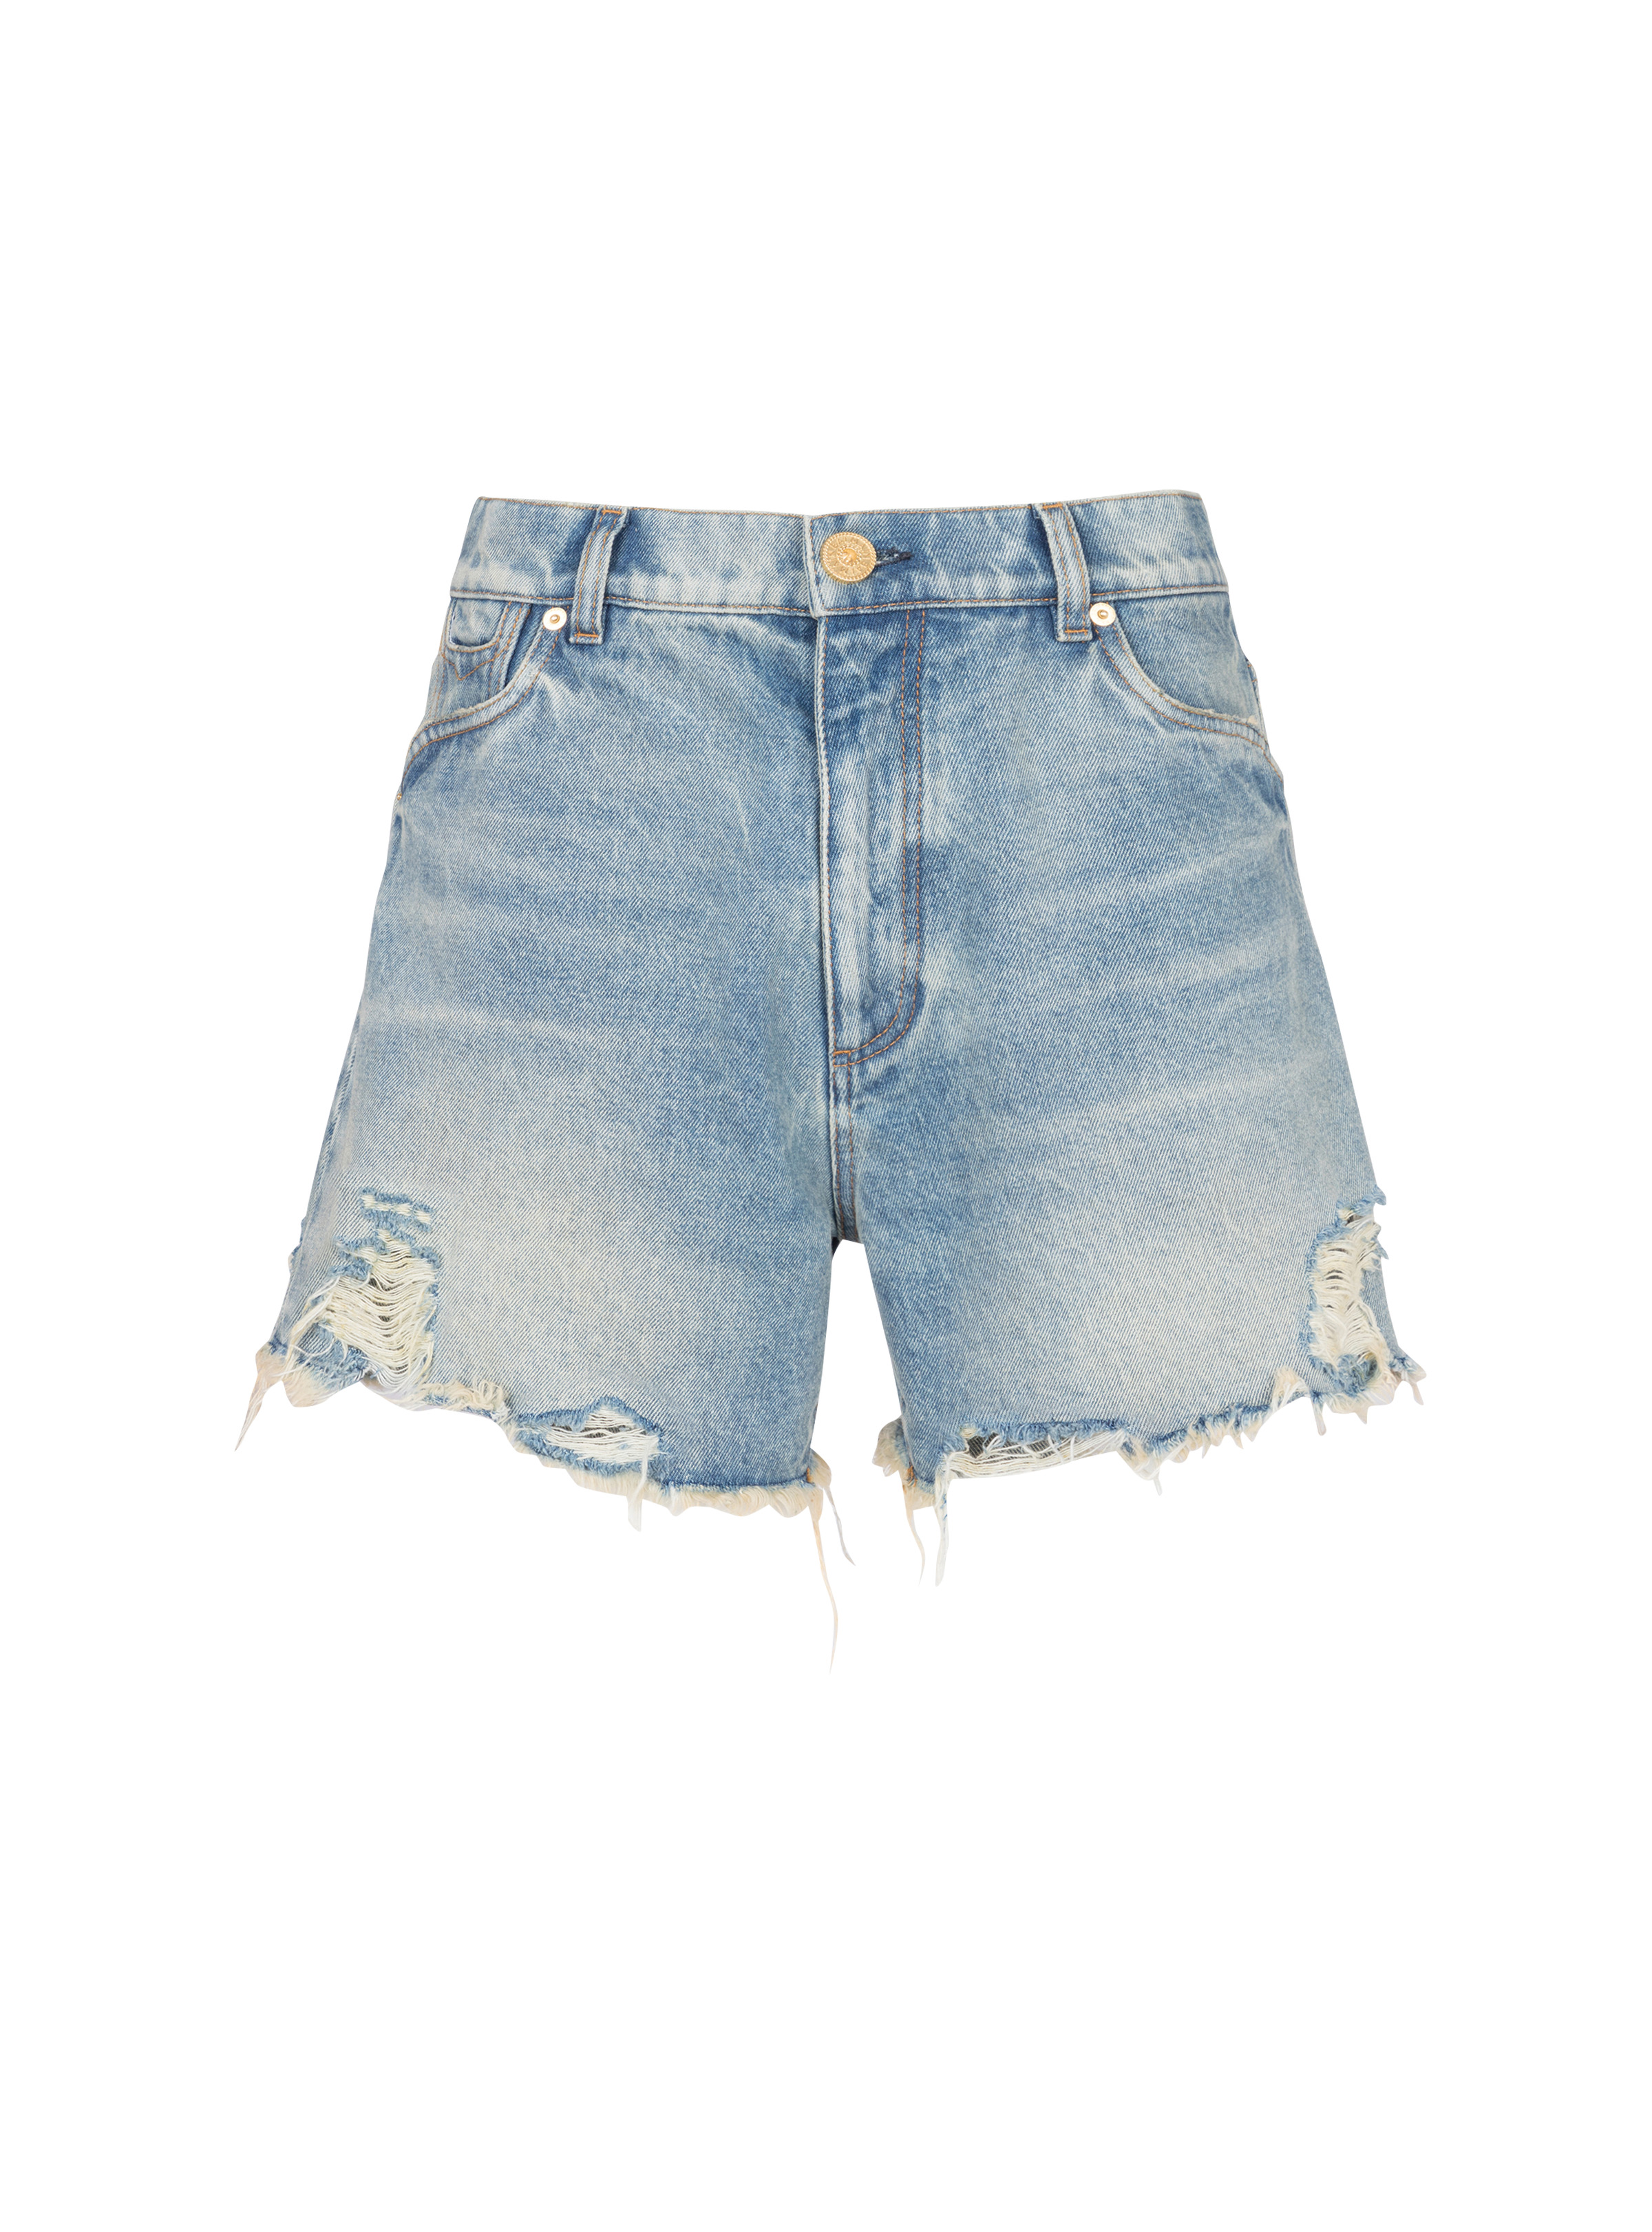 Vintage denim shorts - 1